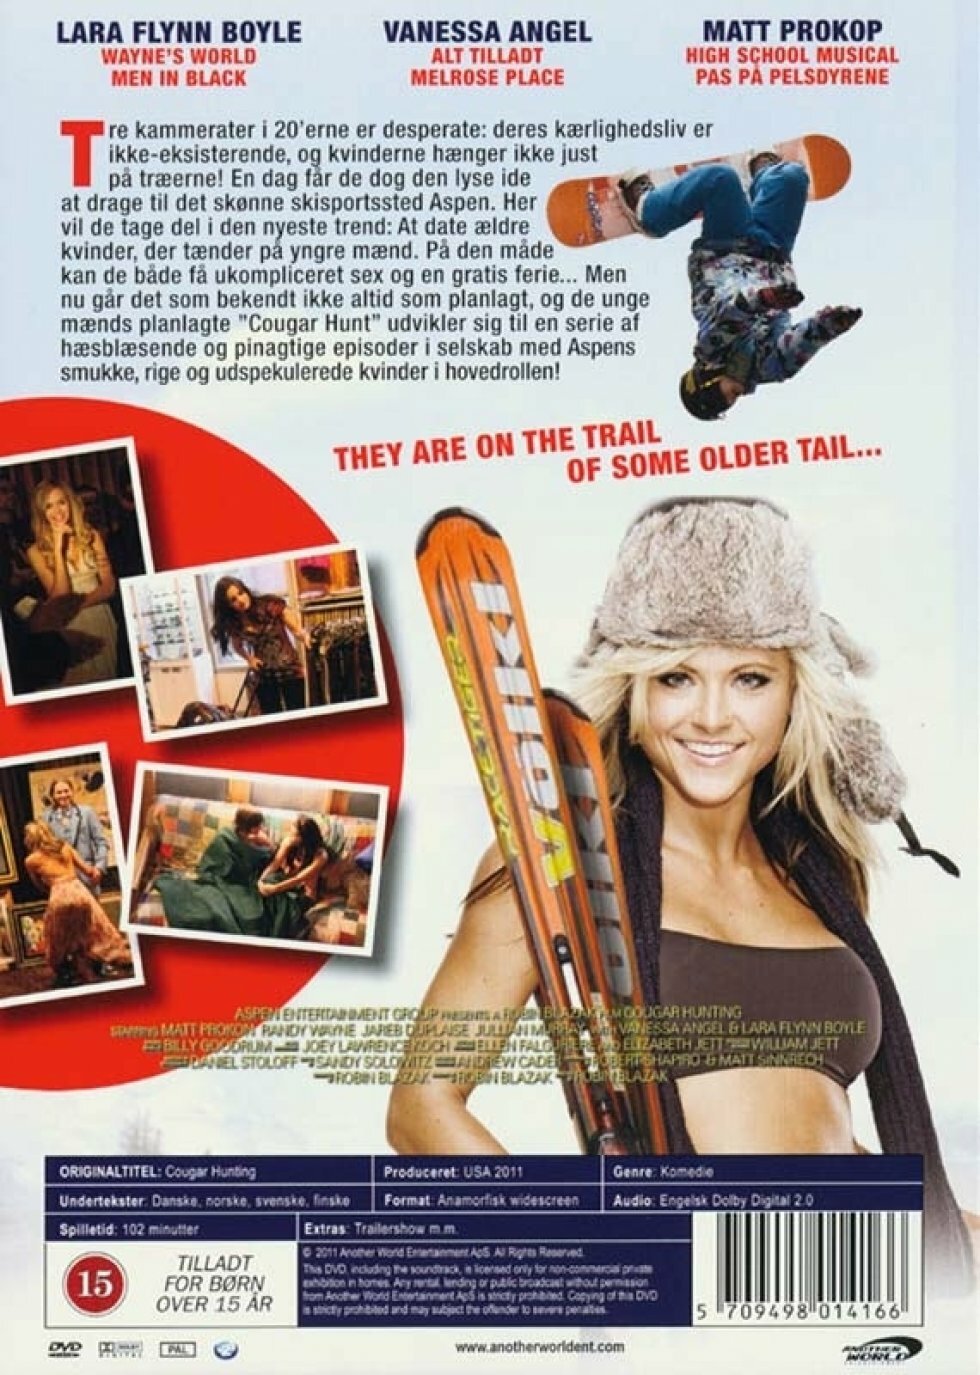 Another World Entertainment - Cougar Hunting - På Blu-ray og dvd